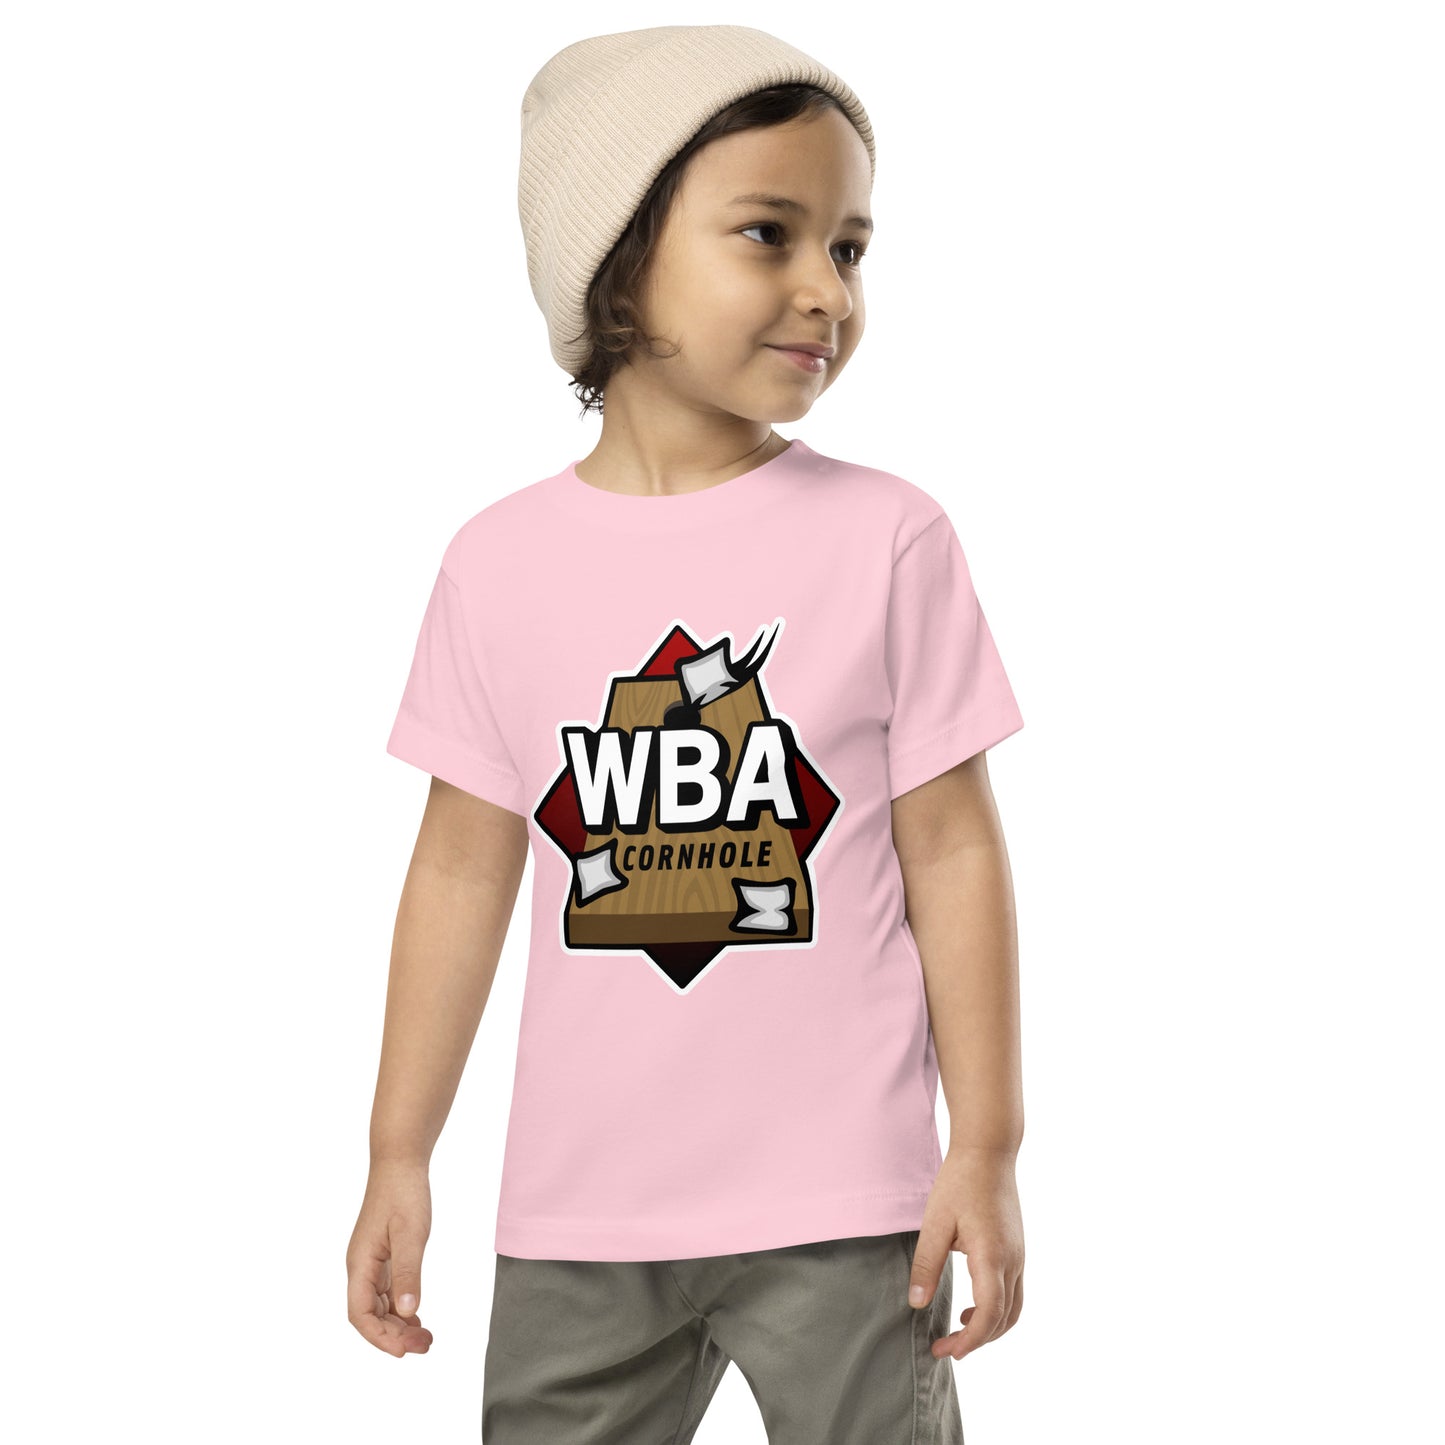 WBA Cornhole Toddler Short Sleeve Tee